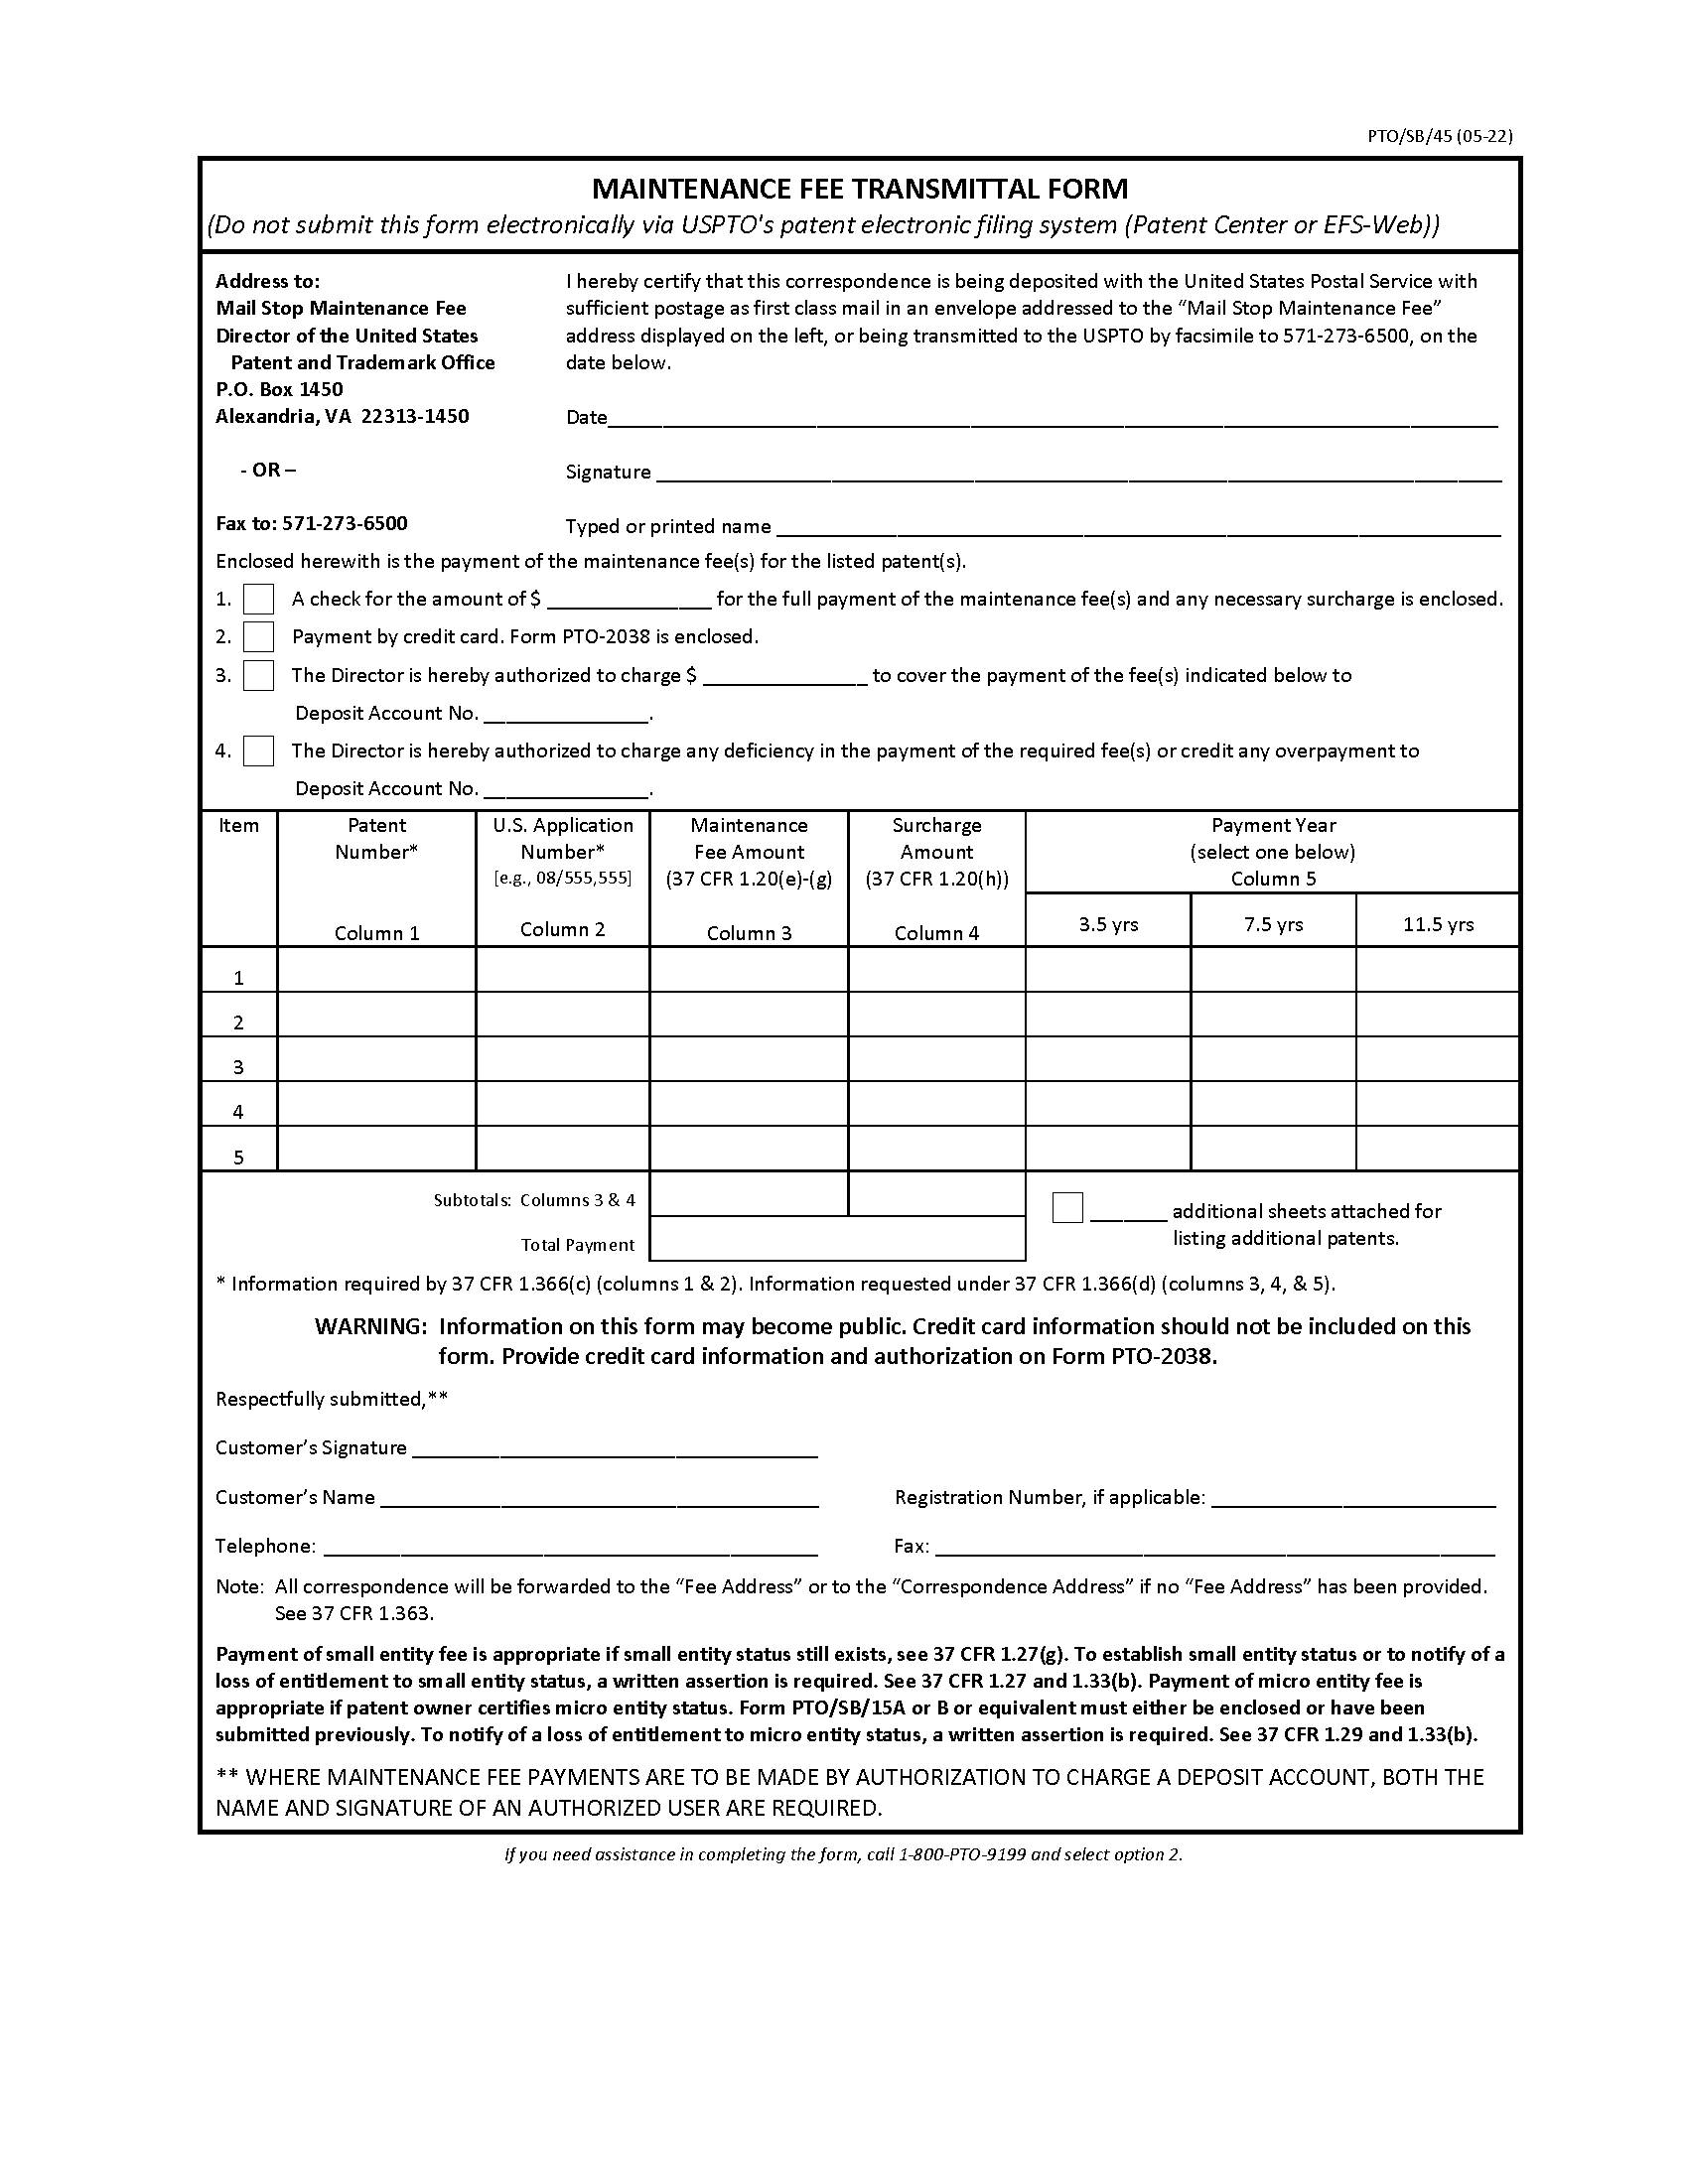 Maintenance Fee Transmittal Form (PTO/SB/45)